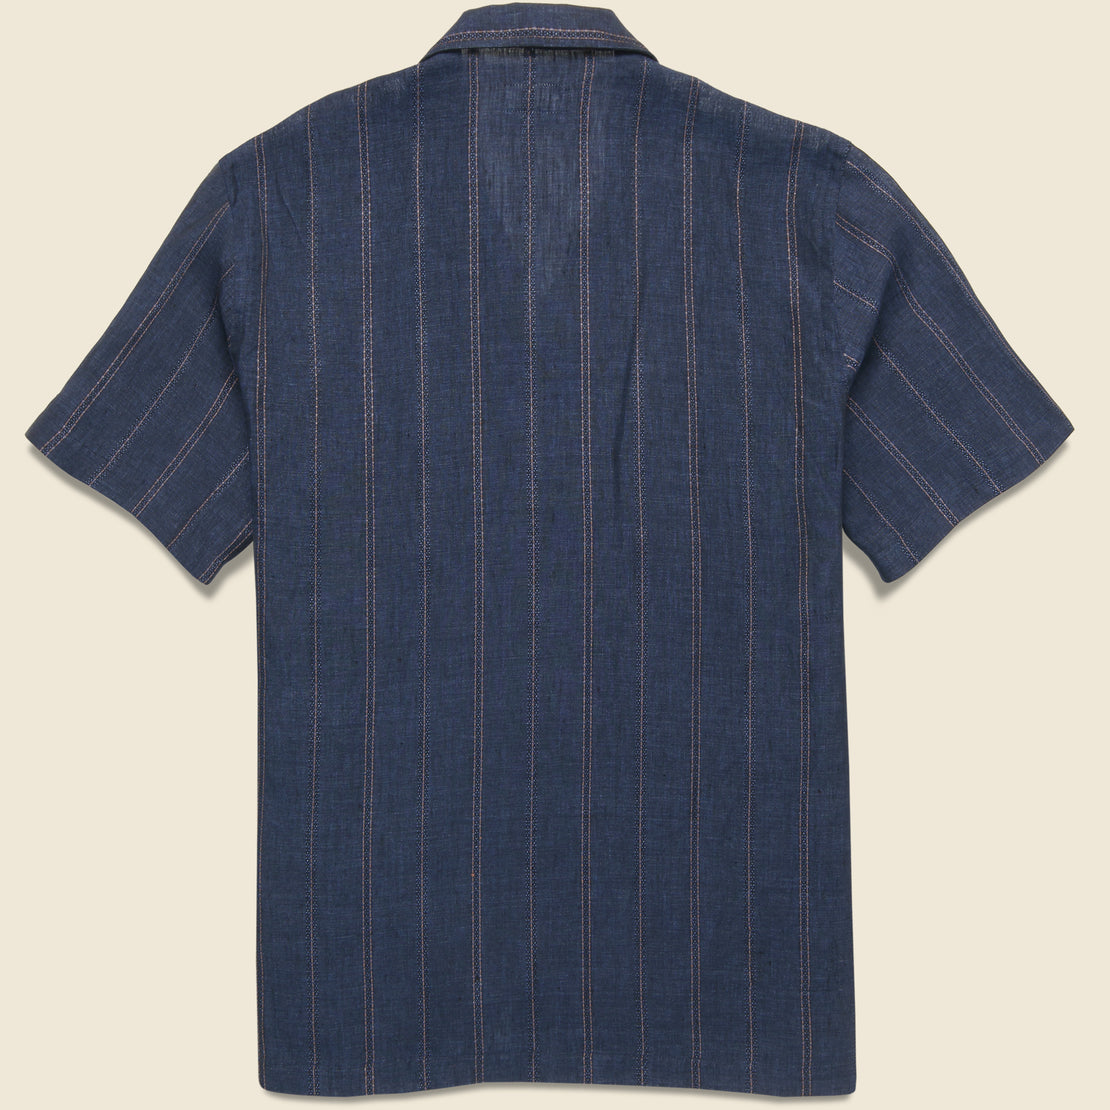 Stripe Linen Road Shirt - Indigo - Universal Works - STAG Provisions - Tops - S/S Woven - Stripe